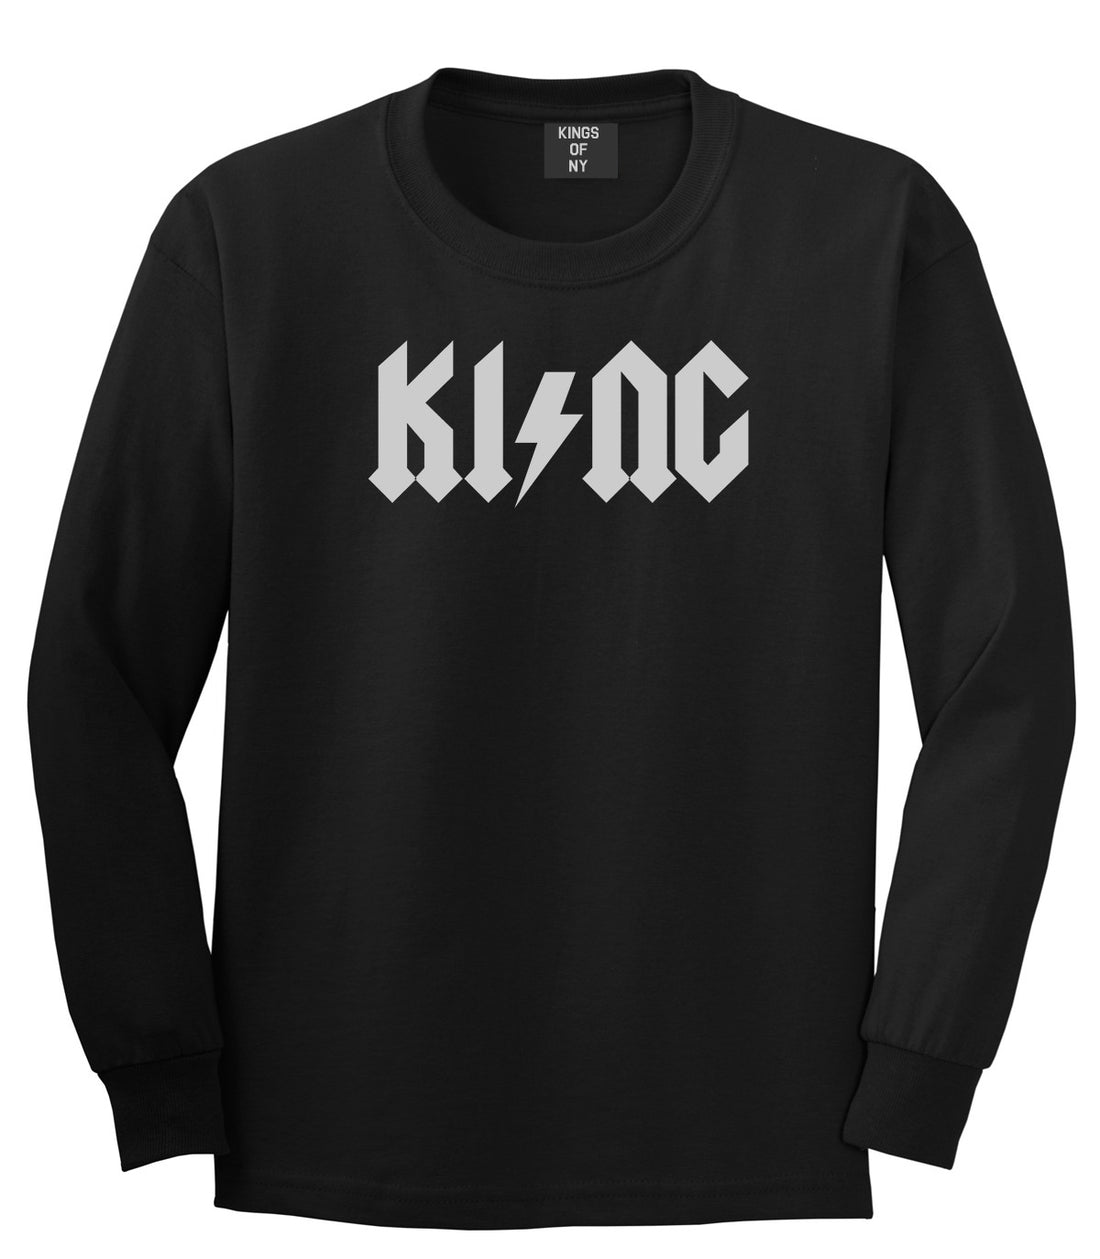 KI NG Music Parody Long Sleeve T-Shirt in Black